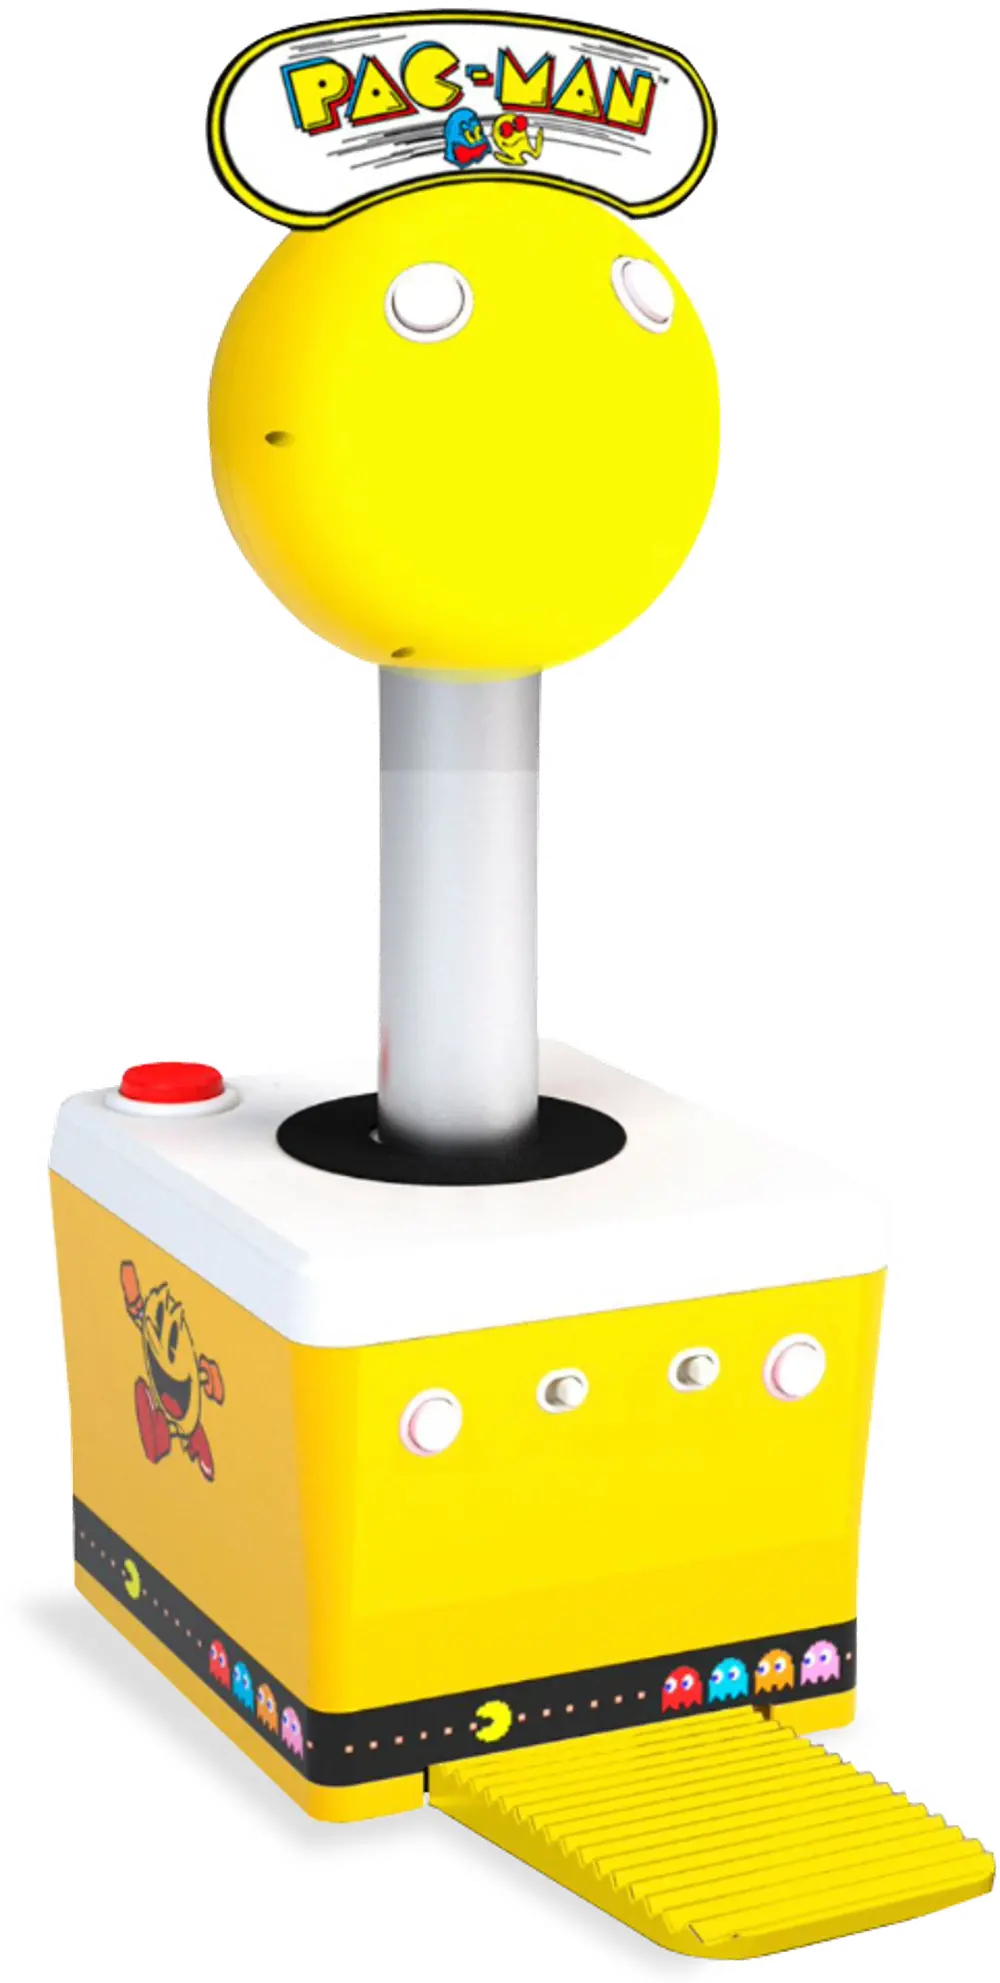 ARCADE1UP/PAC-STICK Arcade 1UP Pac-Man Giant Joystick Game-1